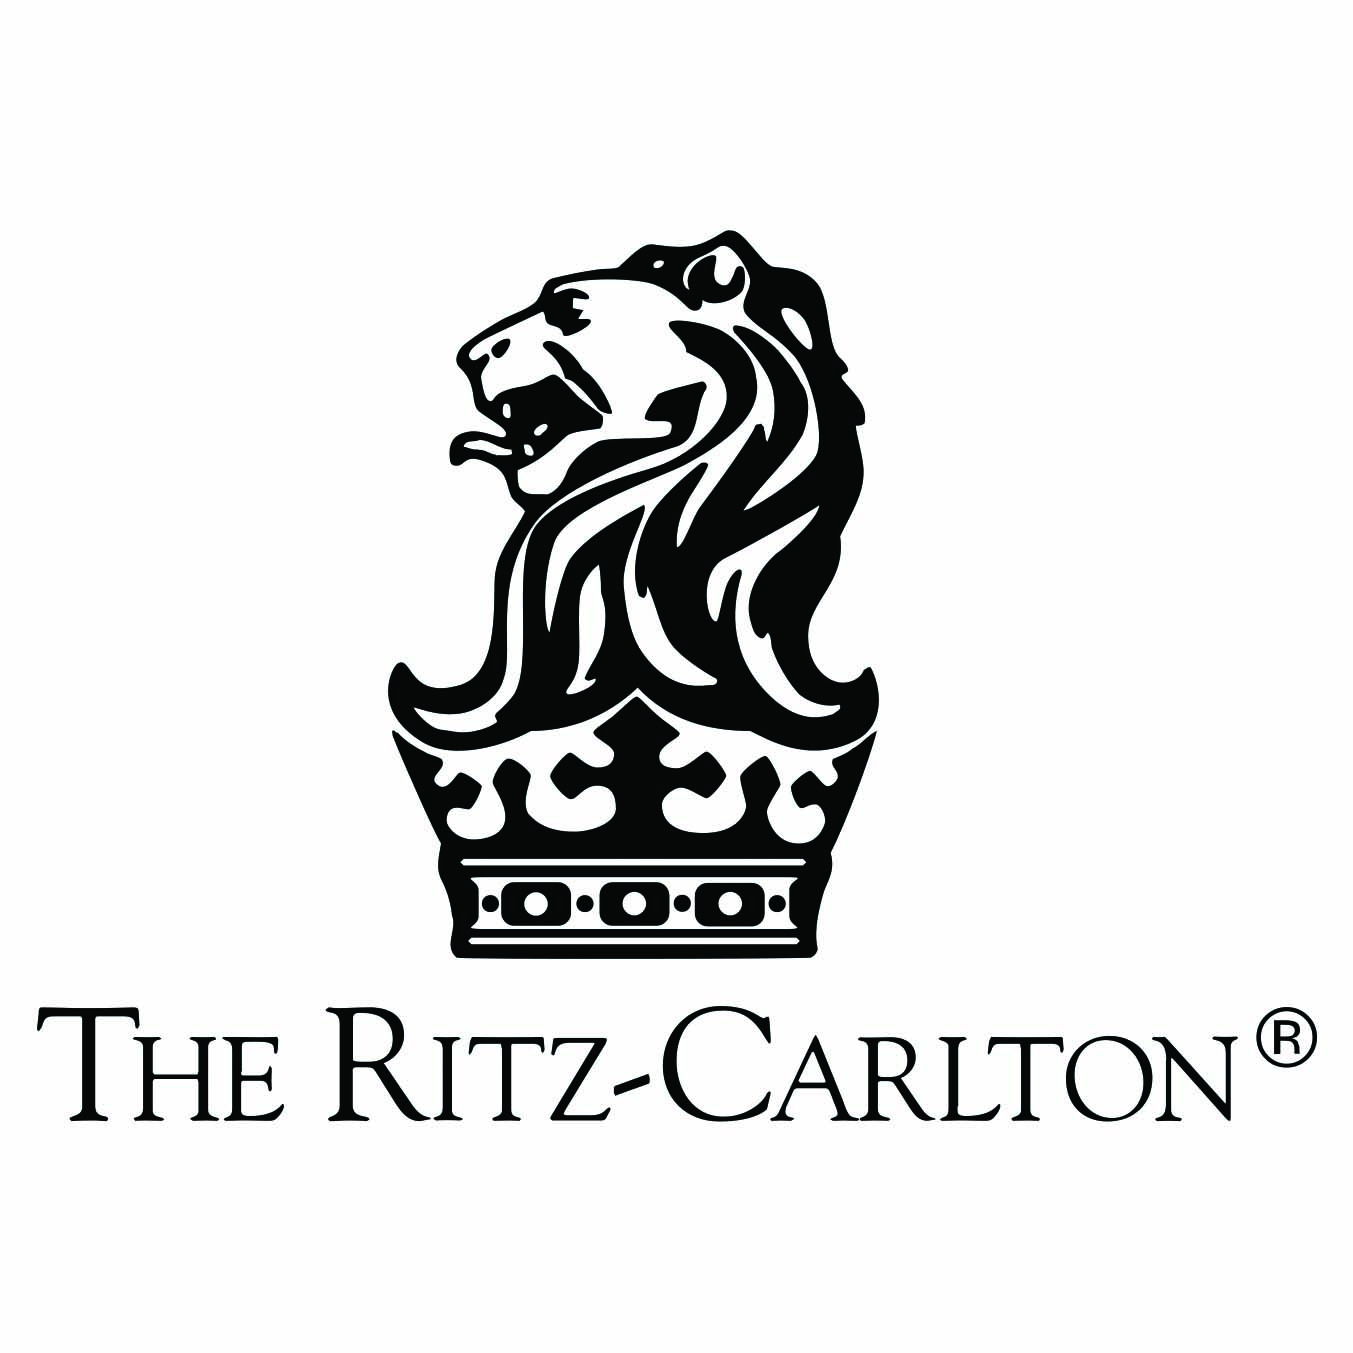 RITZ-CARLTON HOTELS